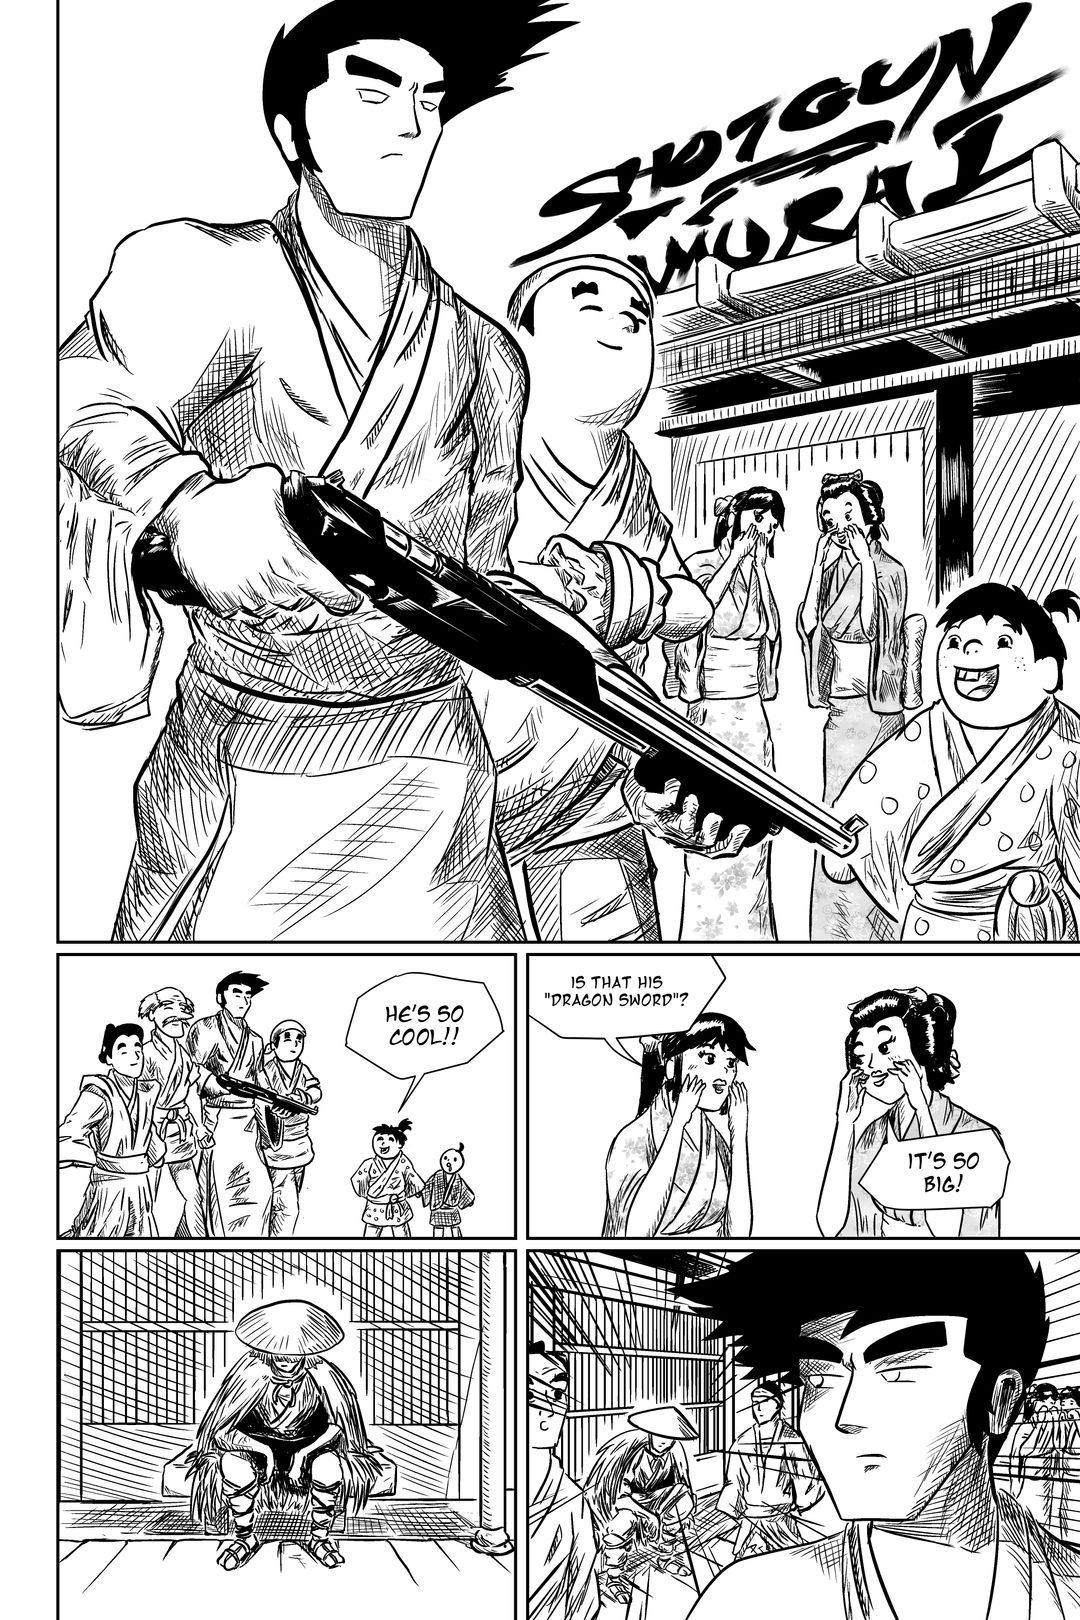 Shotgun Samurai 27 panel 4